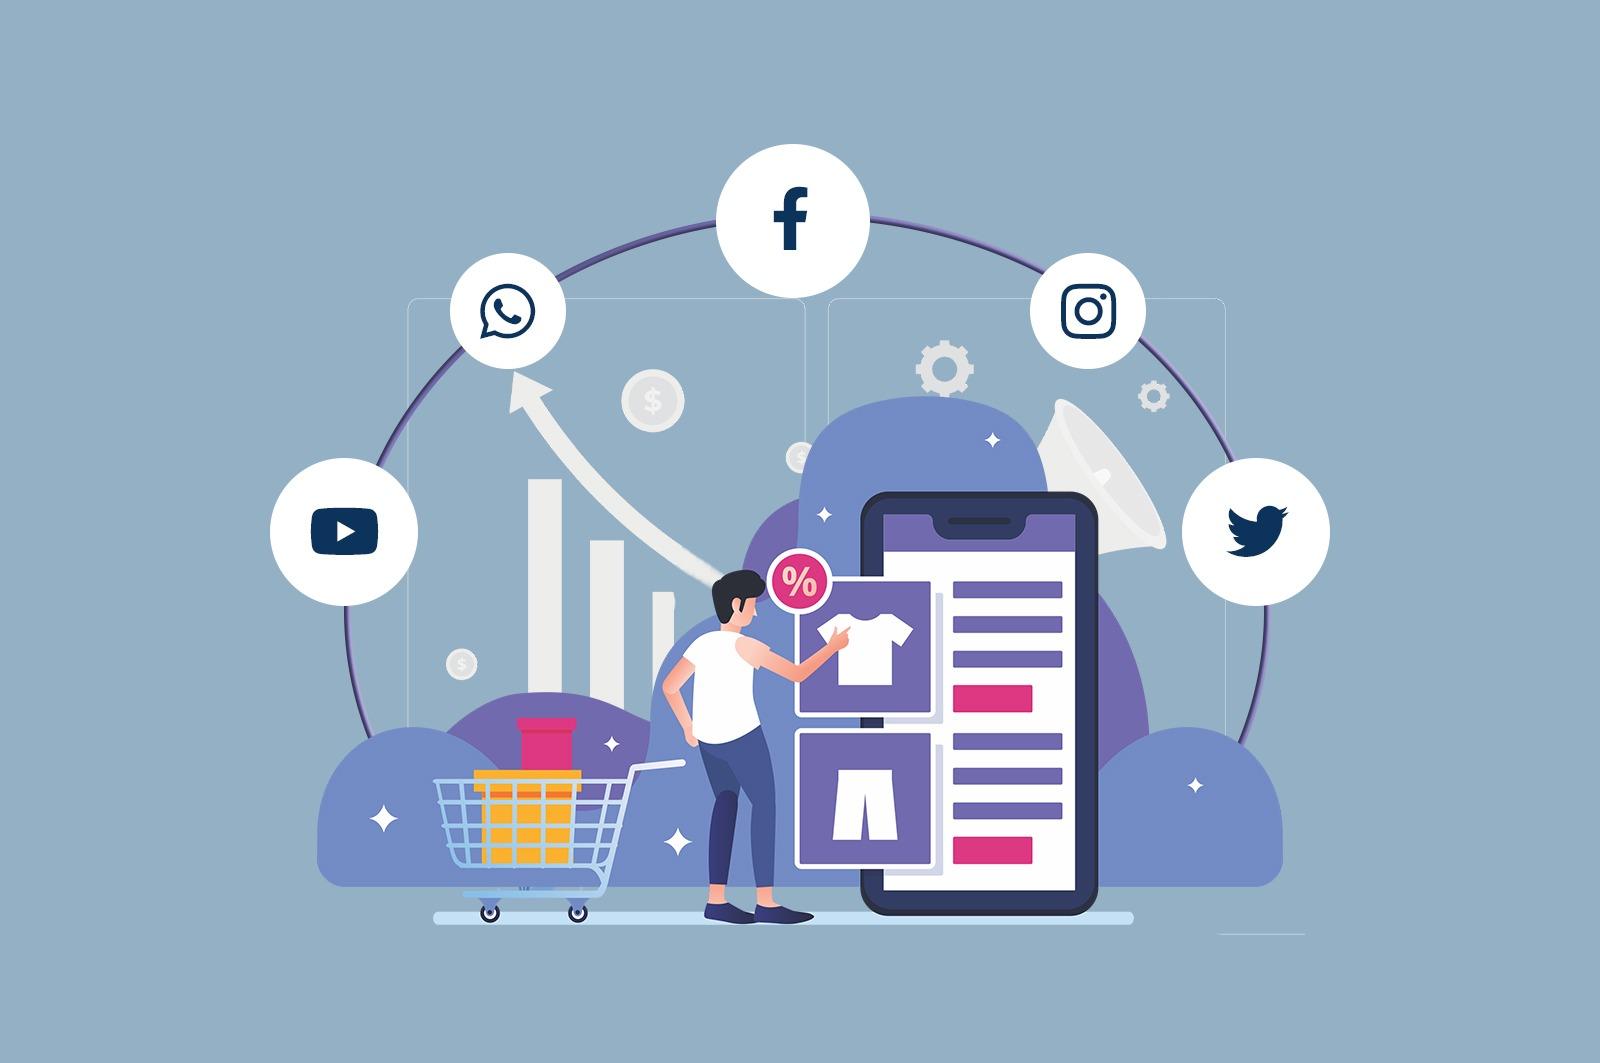 e-Commerce Companies Market their Brands on Social Media